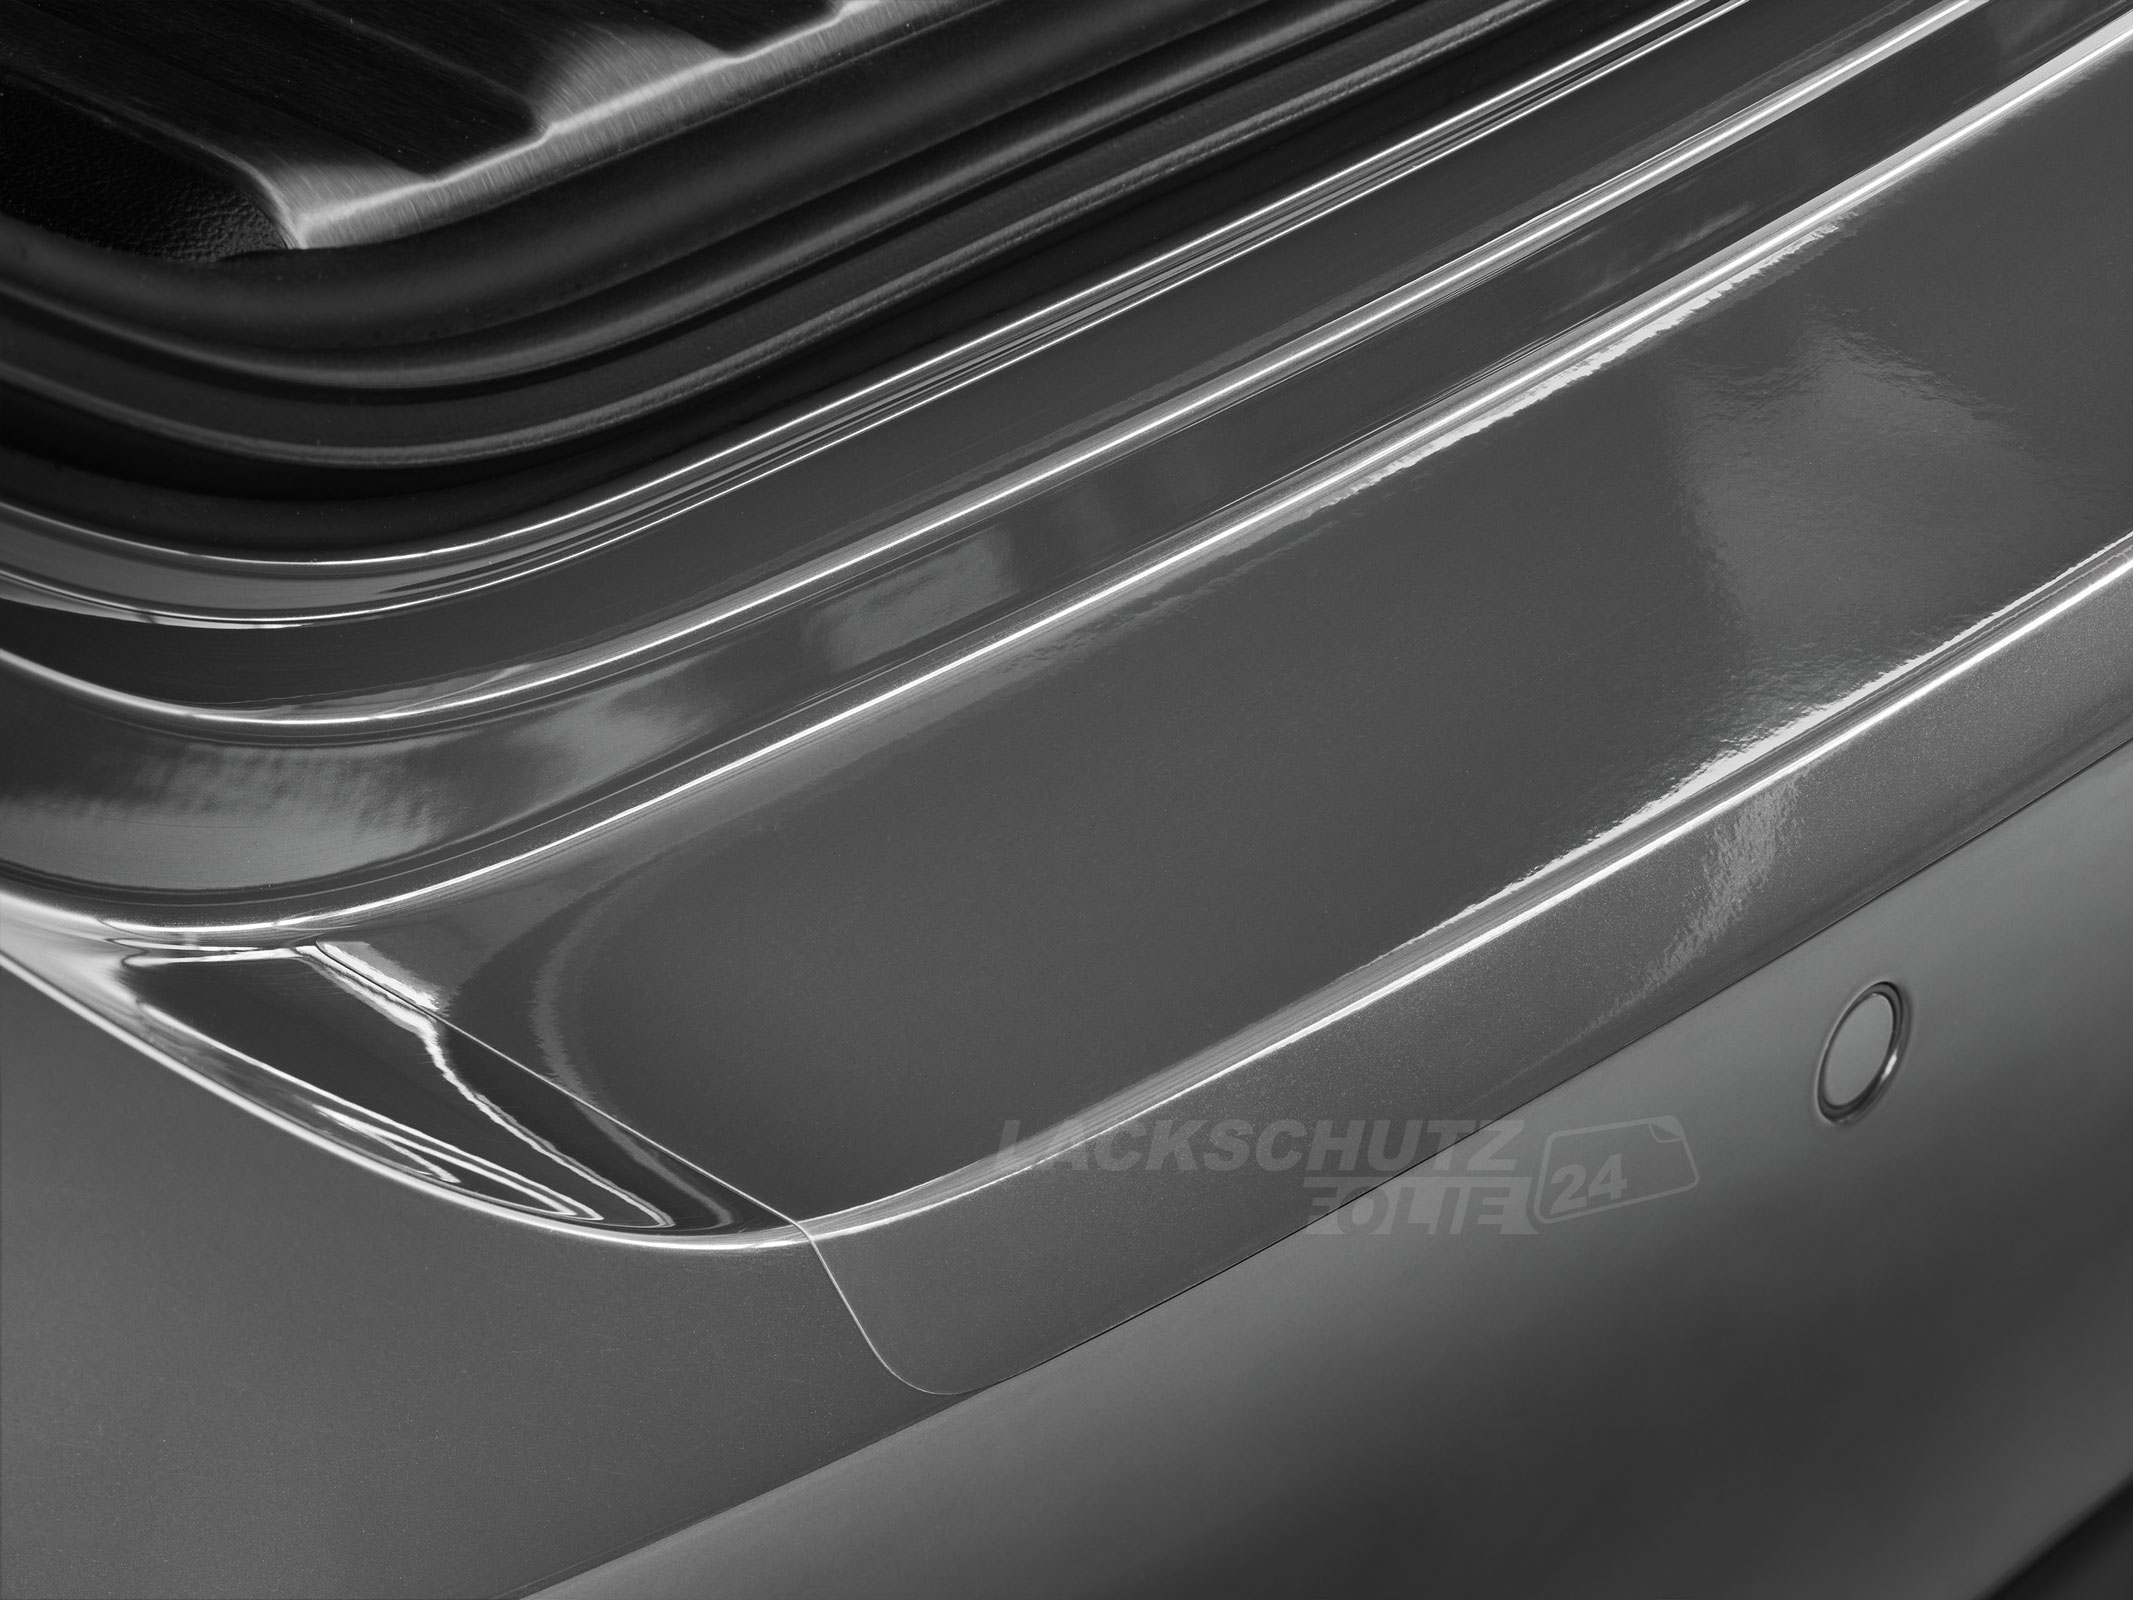 Ladekantenschutzfolie - Transparent Glatt Hochglänzend 240 µm stark für Opel Signum BJ 2003-2008